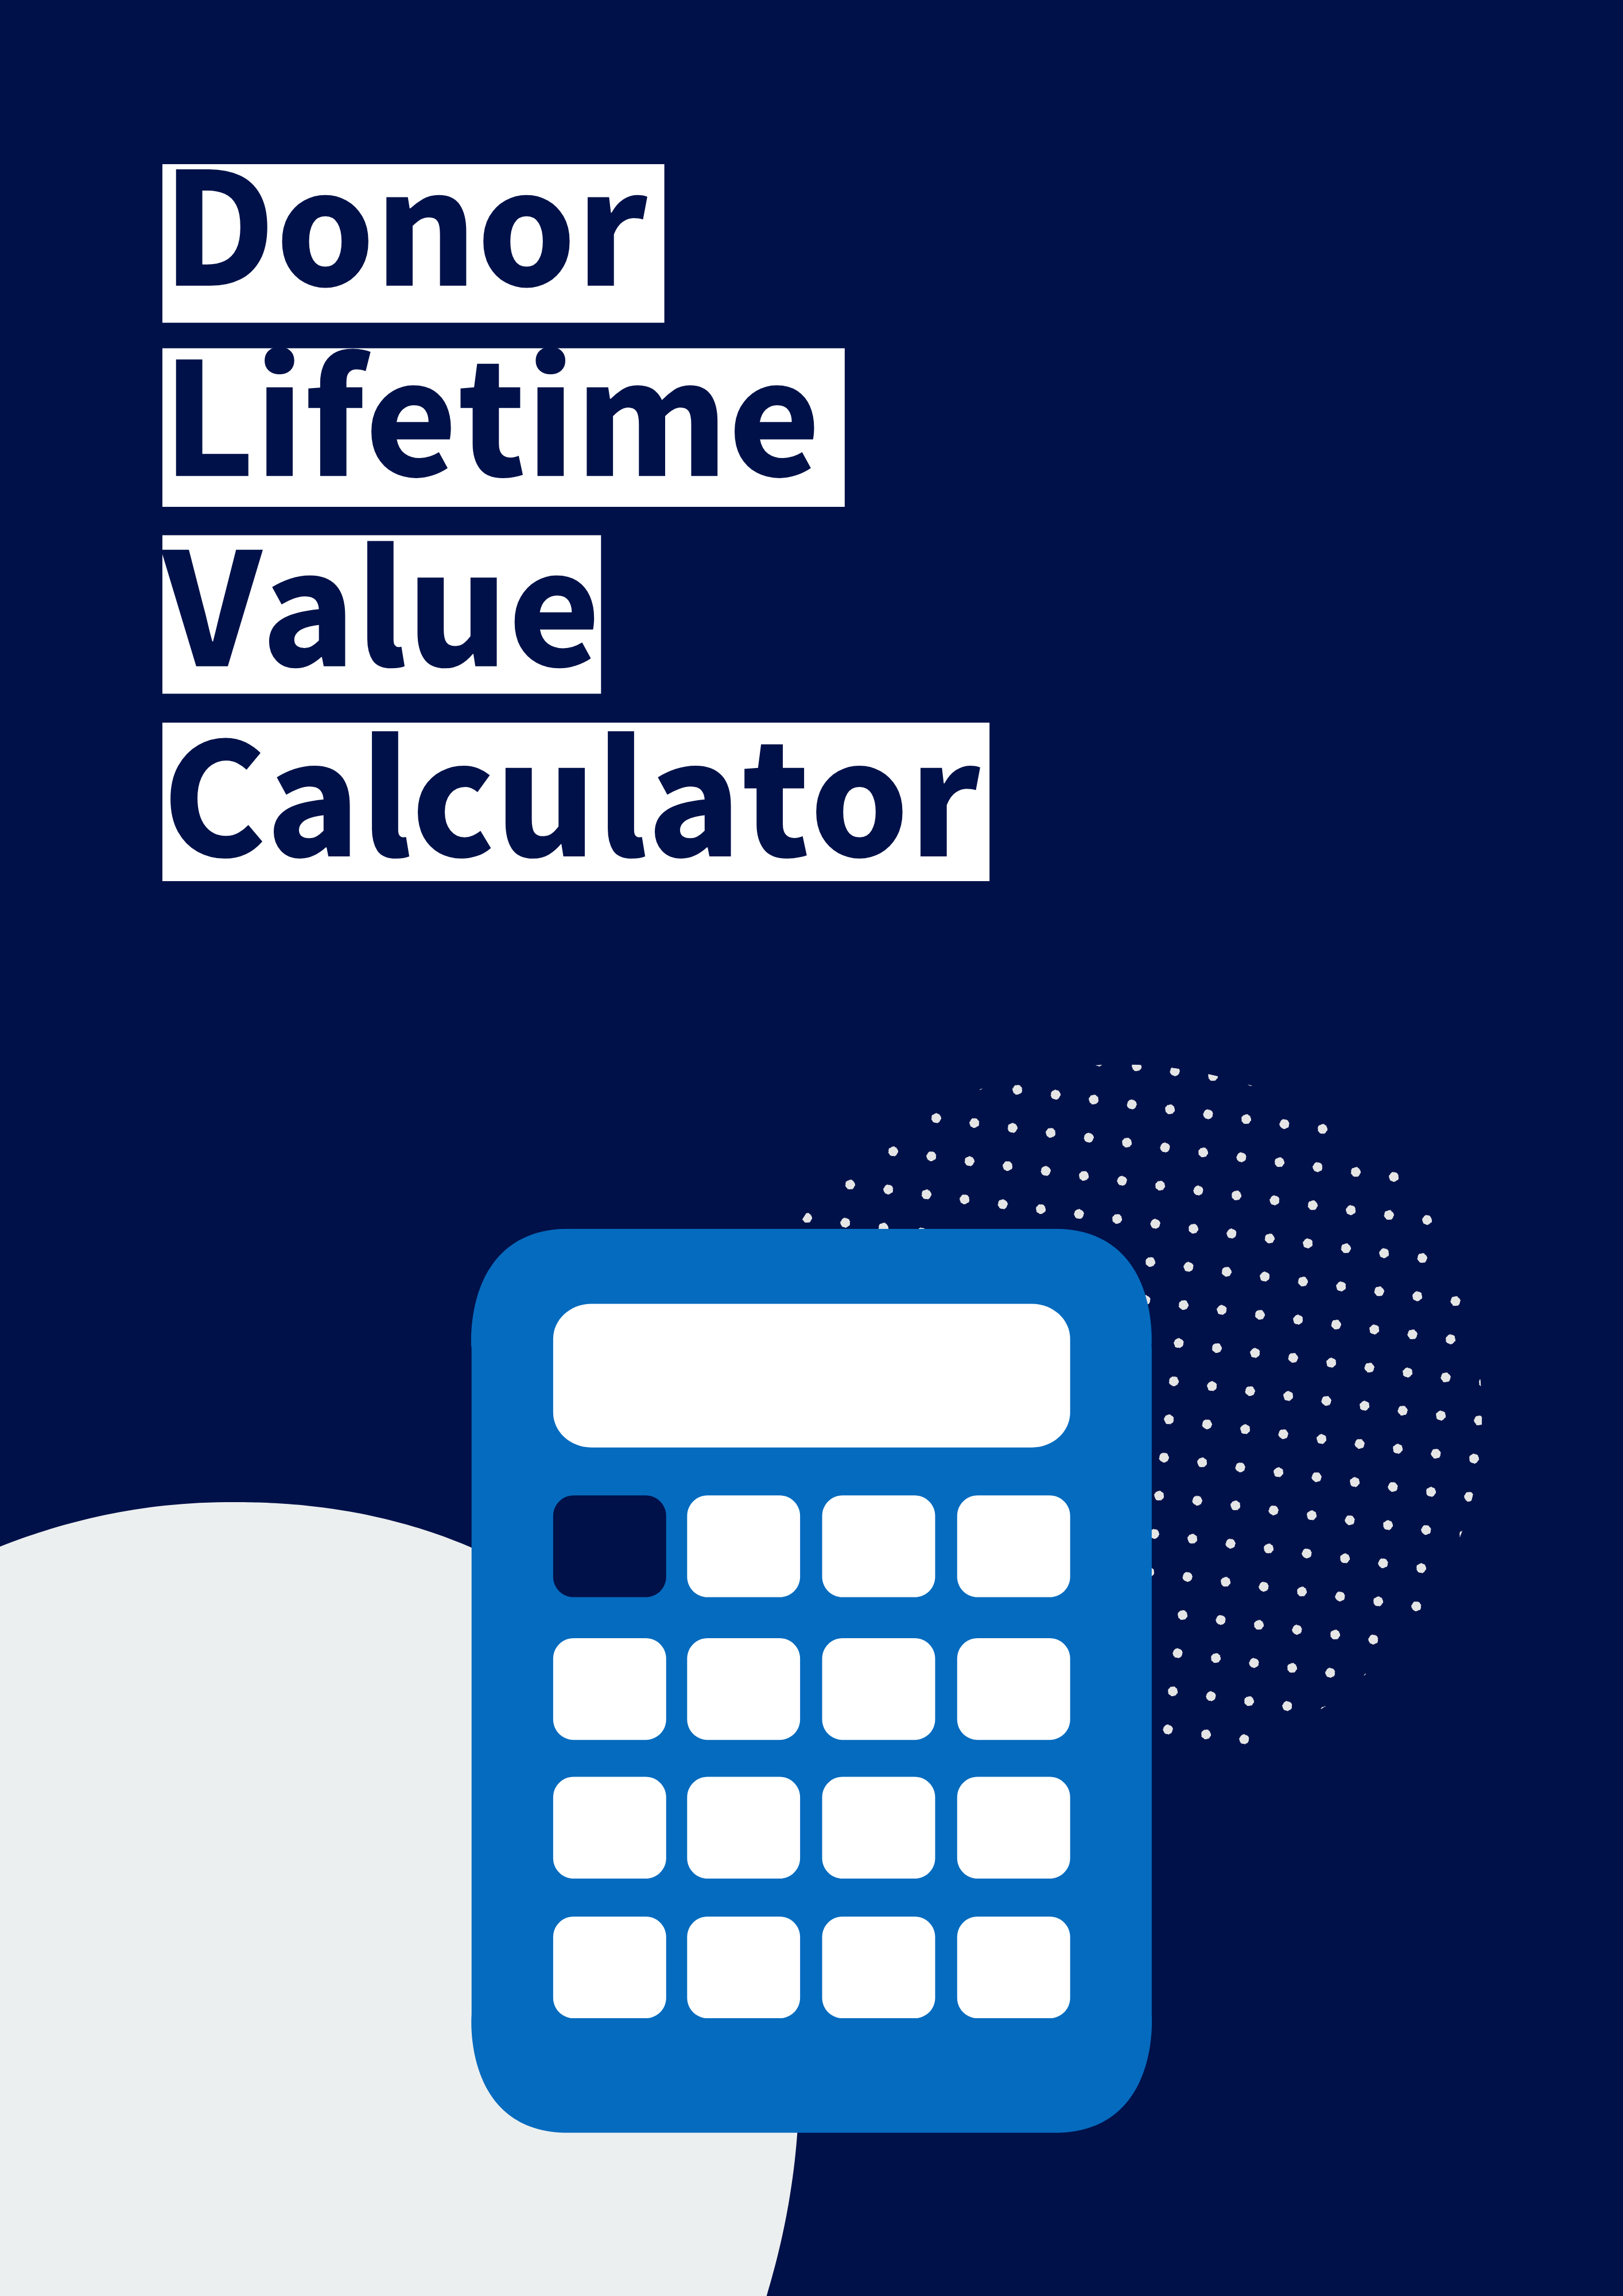 Donor Lifetime Value Calculator